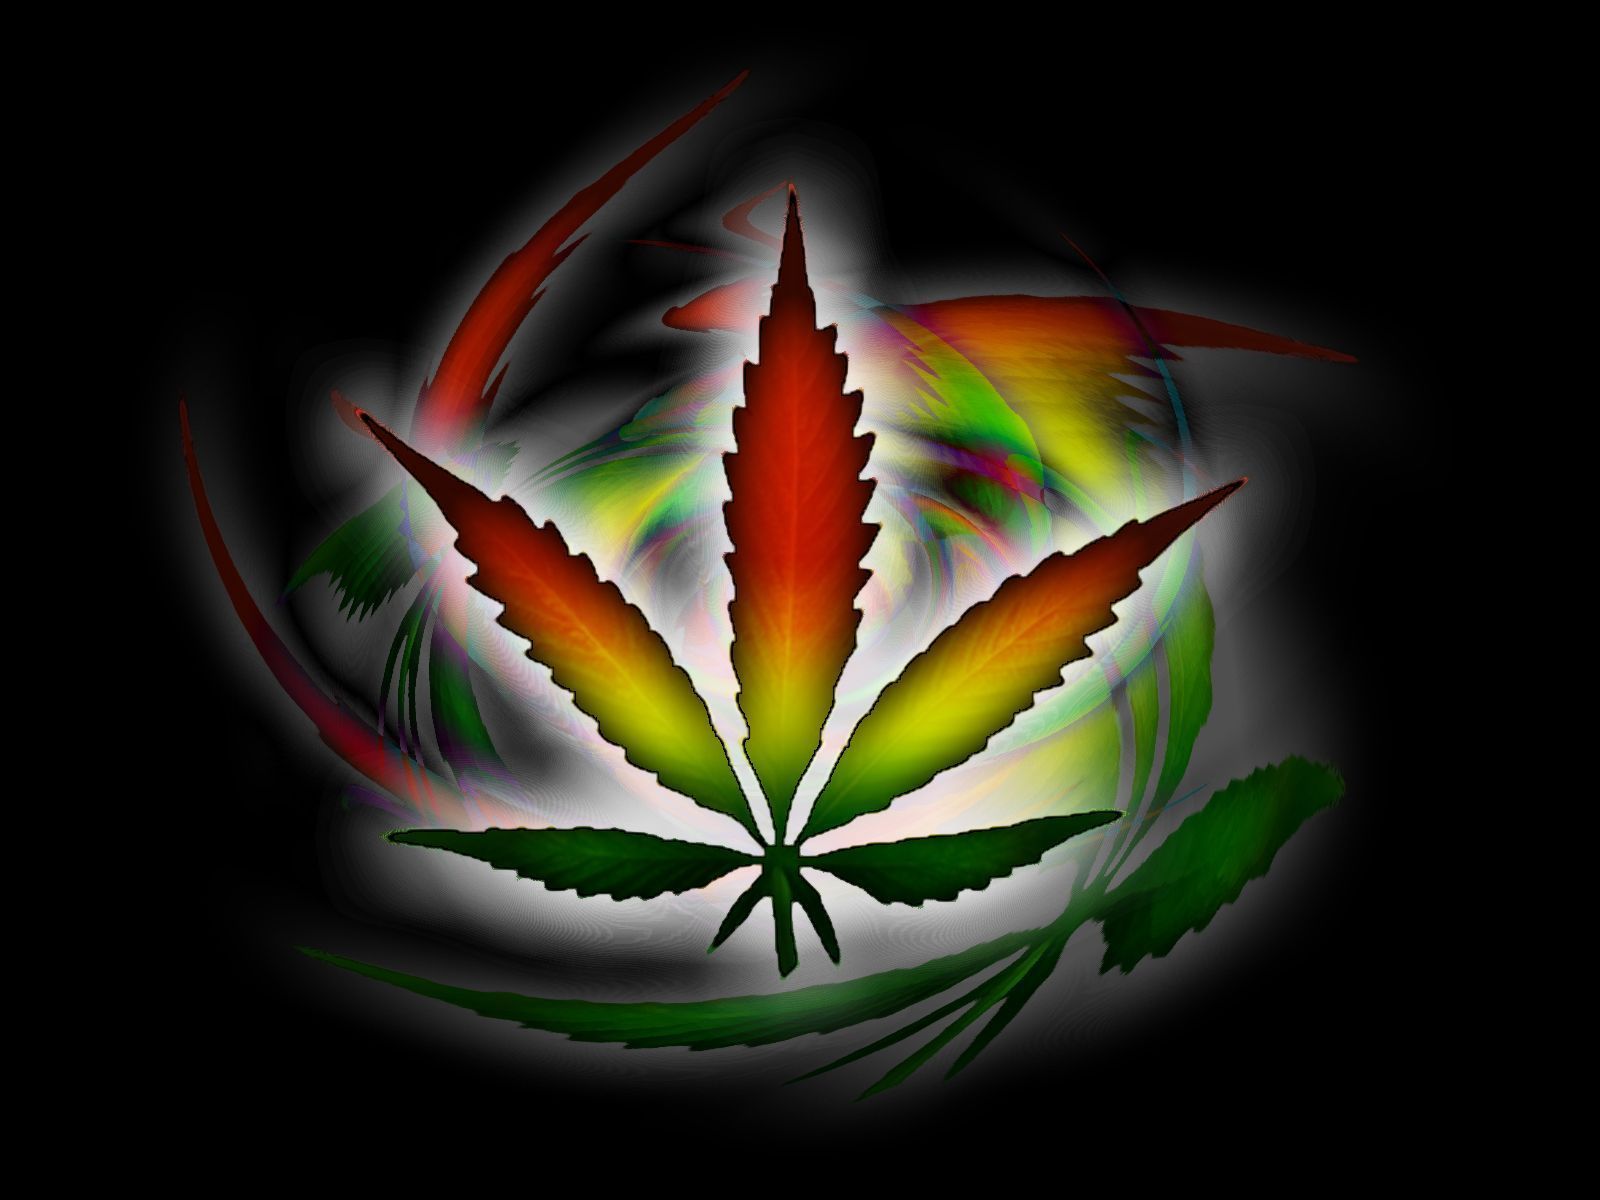 Wallpaper Roll Green Marijuana Cannabis Weed Grass 420 Ganja Leaf 24in x 27ft